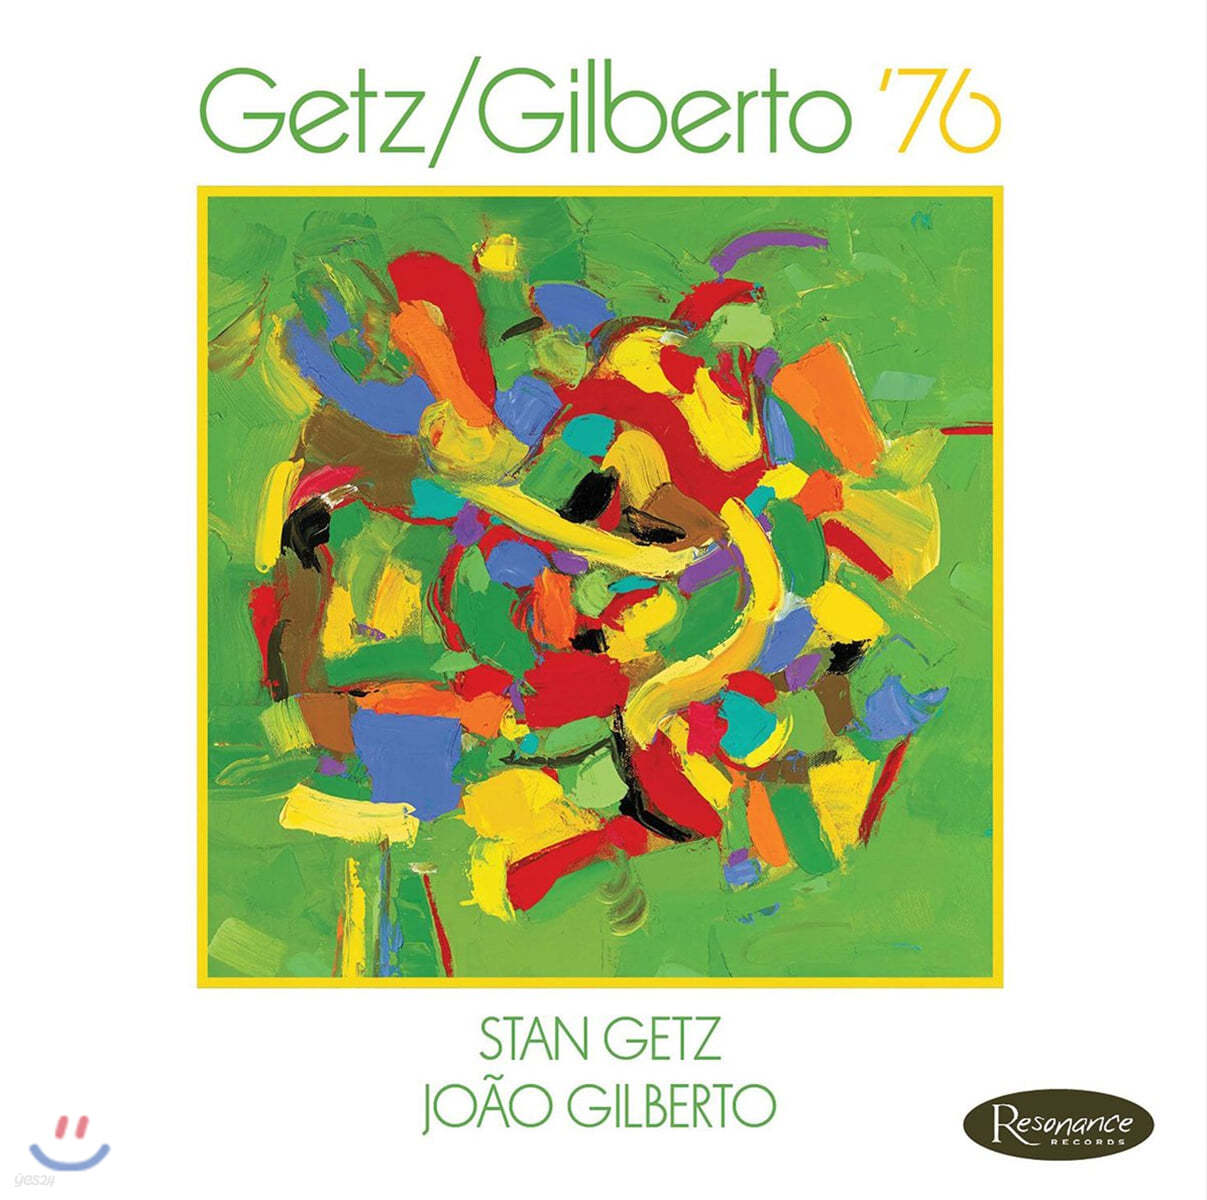 Stan Getz & Joao Gilberto (스탄 게츠 & 주앙 질베르토) - Selections from Getz/Gilberto '76 [10인치 그린 컬러 Vinyl]